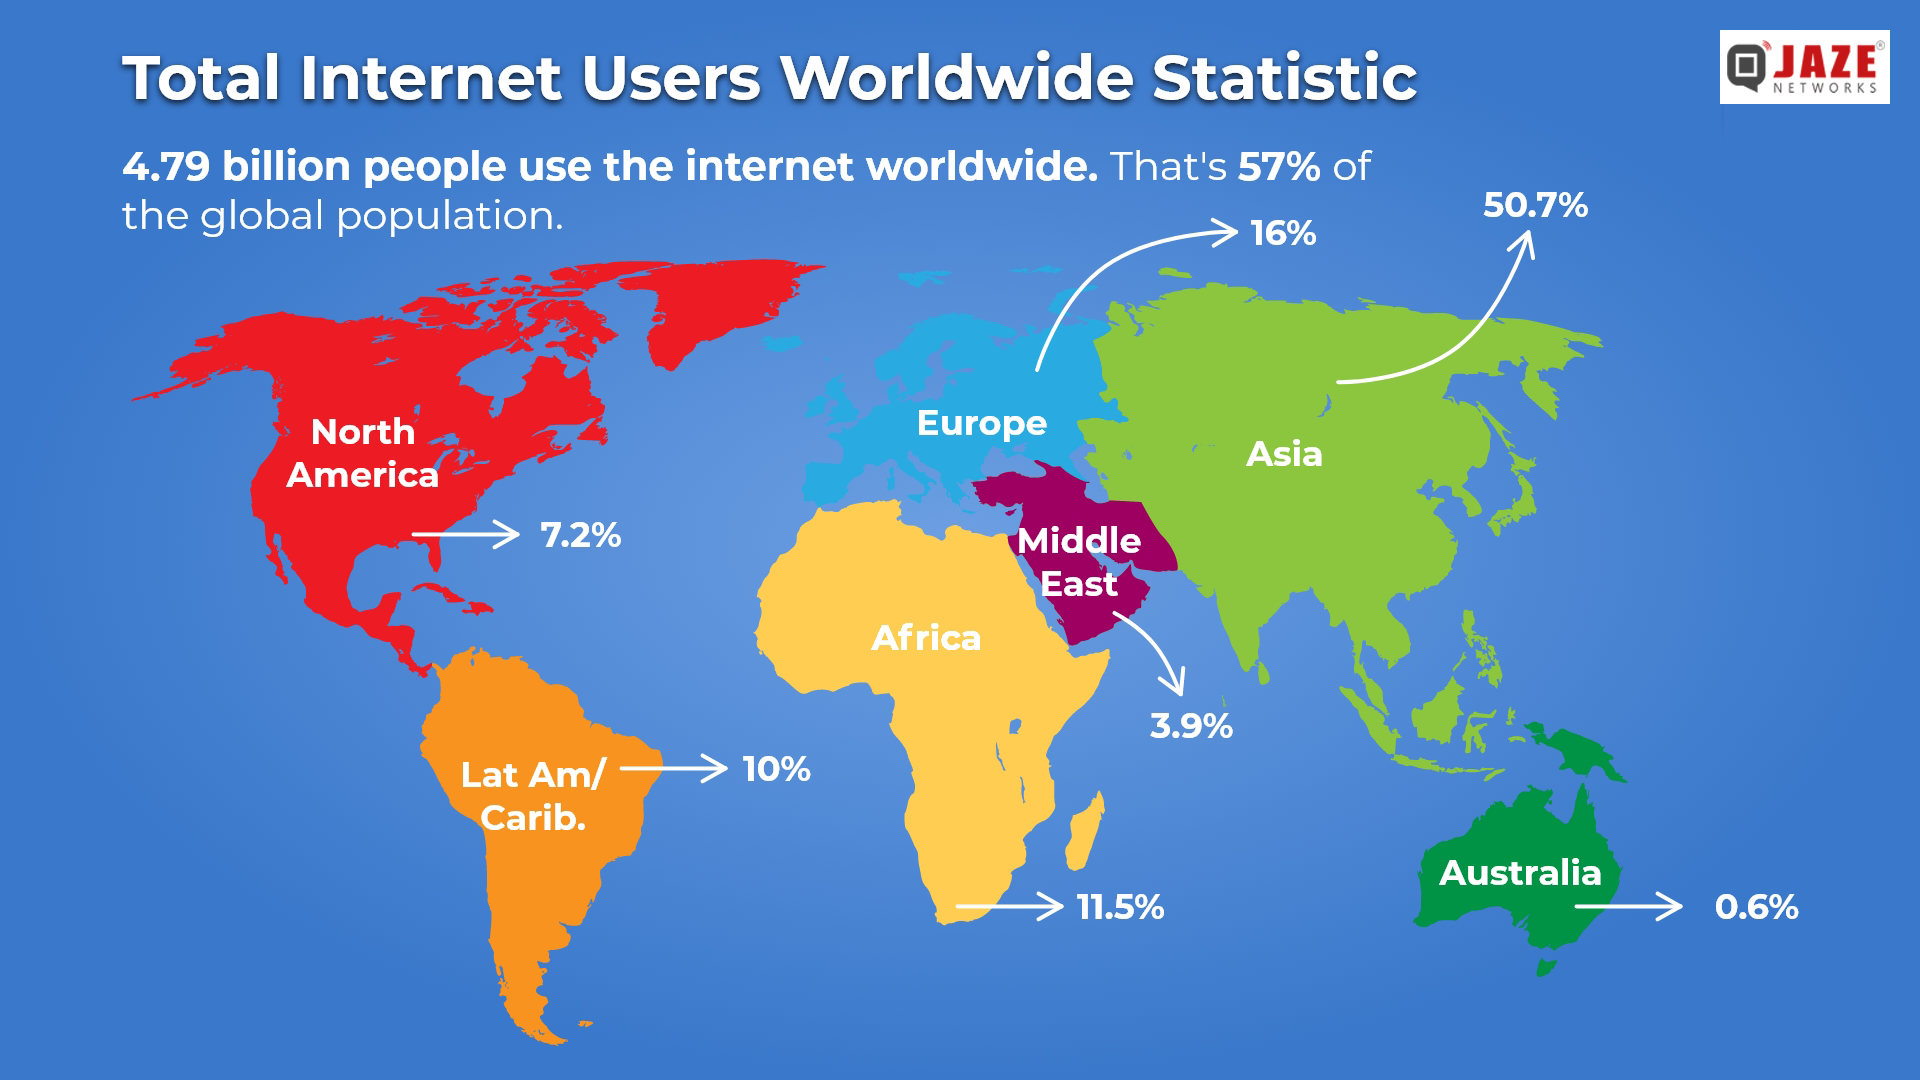 world-internet-users-statistics-jaze-networks